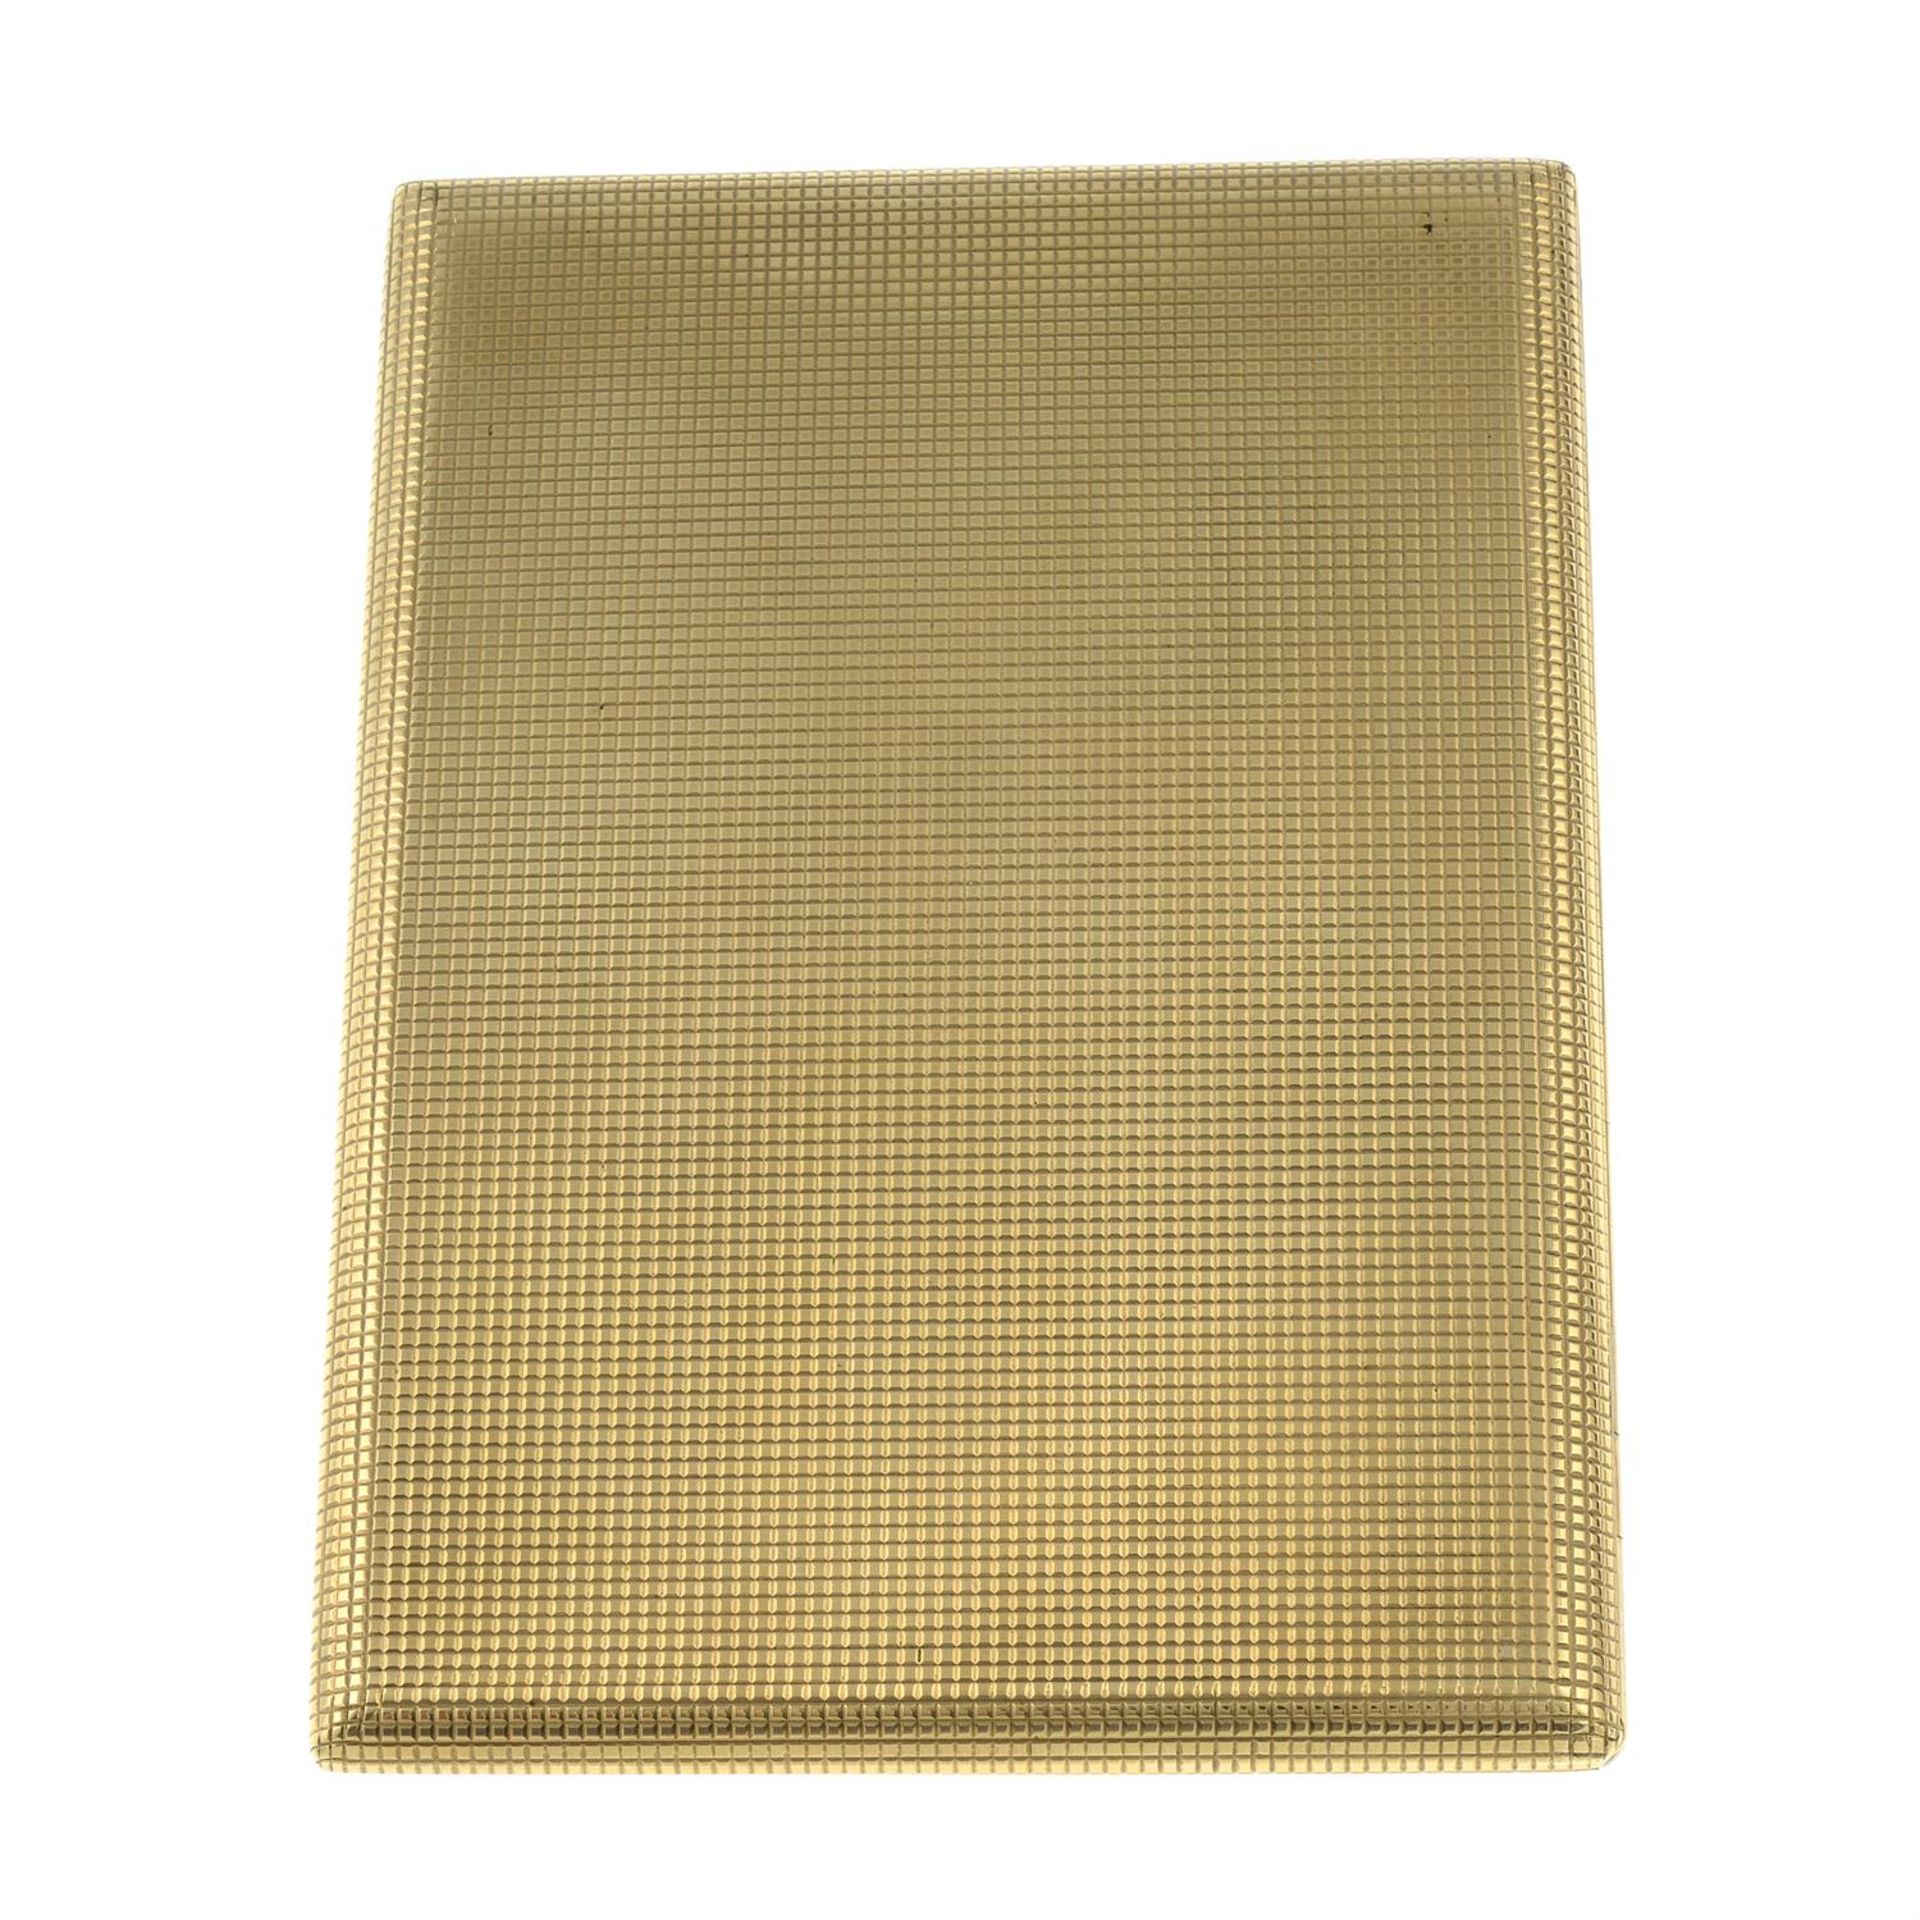 A 1960s 9ct gold textured cigarette case, signed Dunhill London. - Bild 2 aus 4